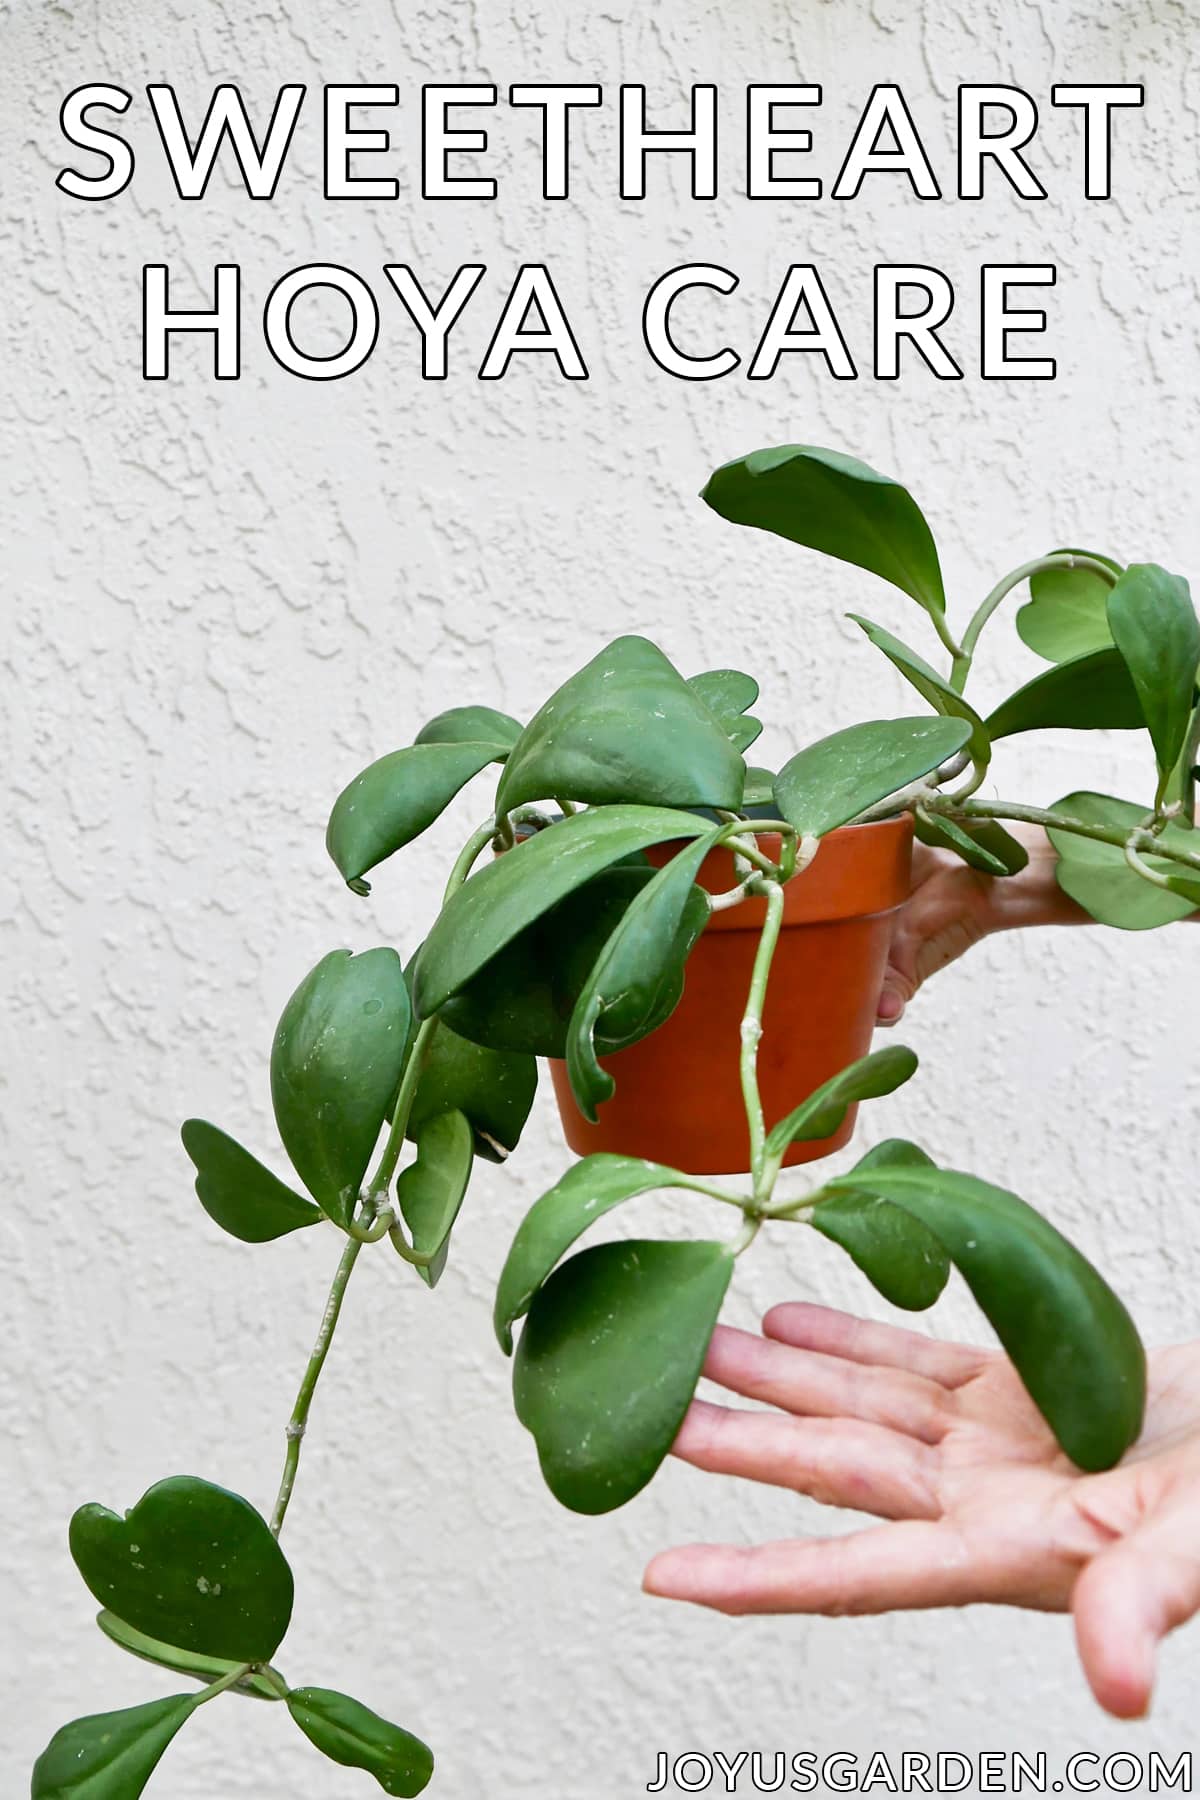 a hand holds a hoya kerrii plant the text reads sweetheart hoya care